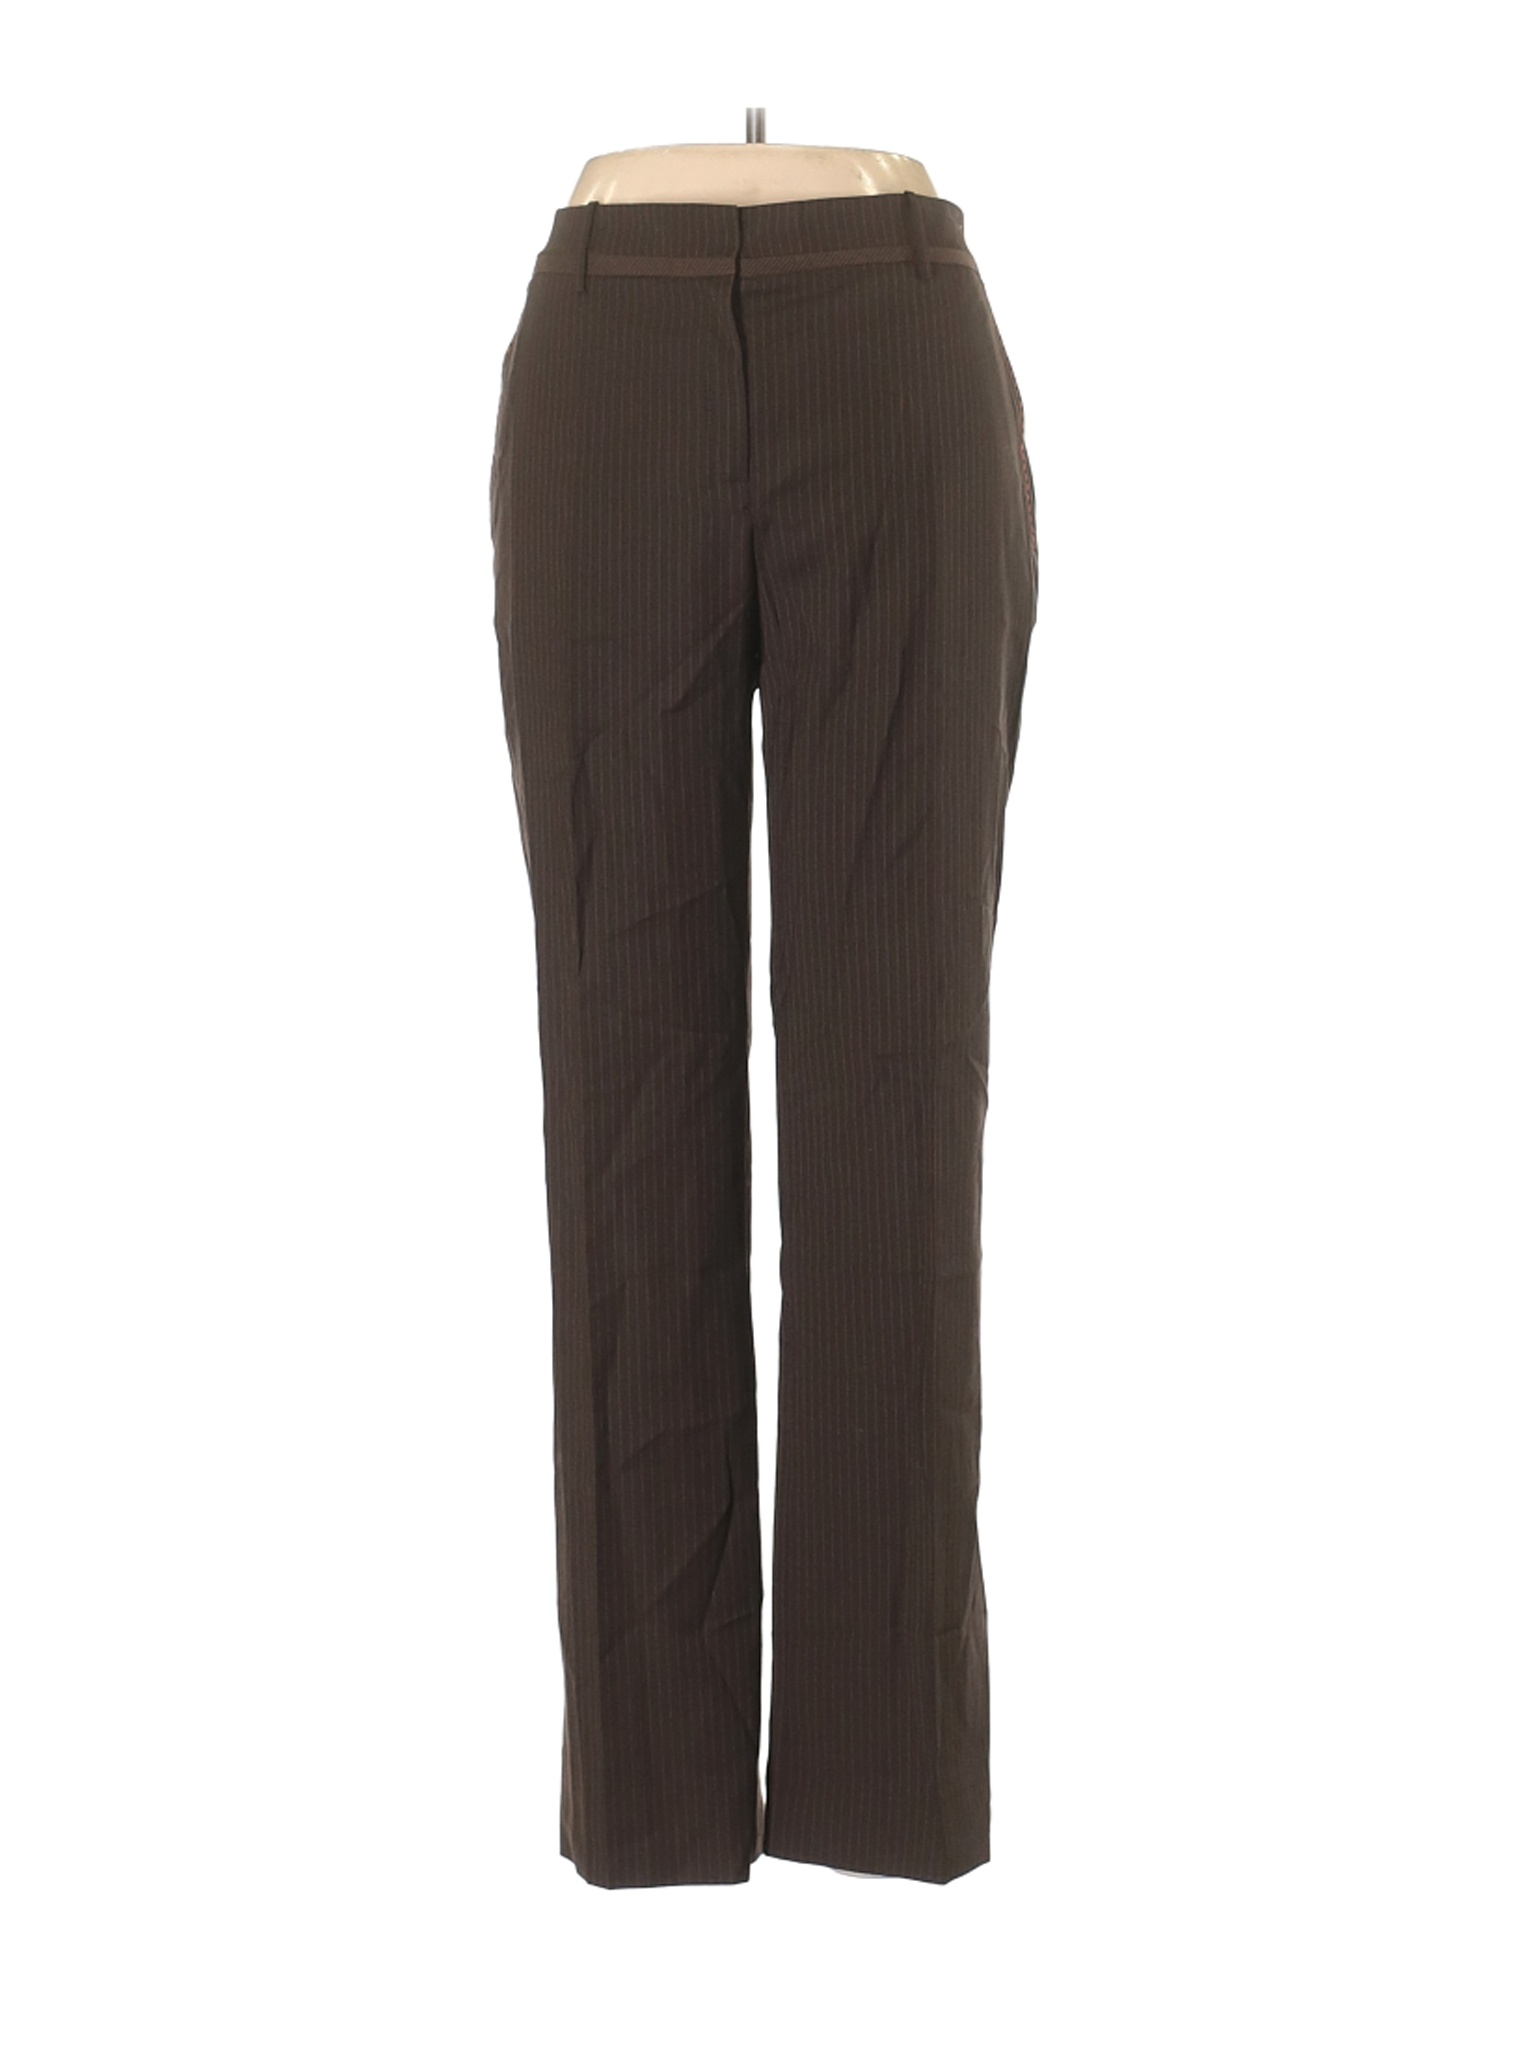 Faconnable Women Brown Wool Pants 8 | eBay